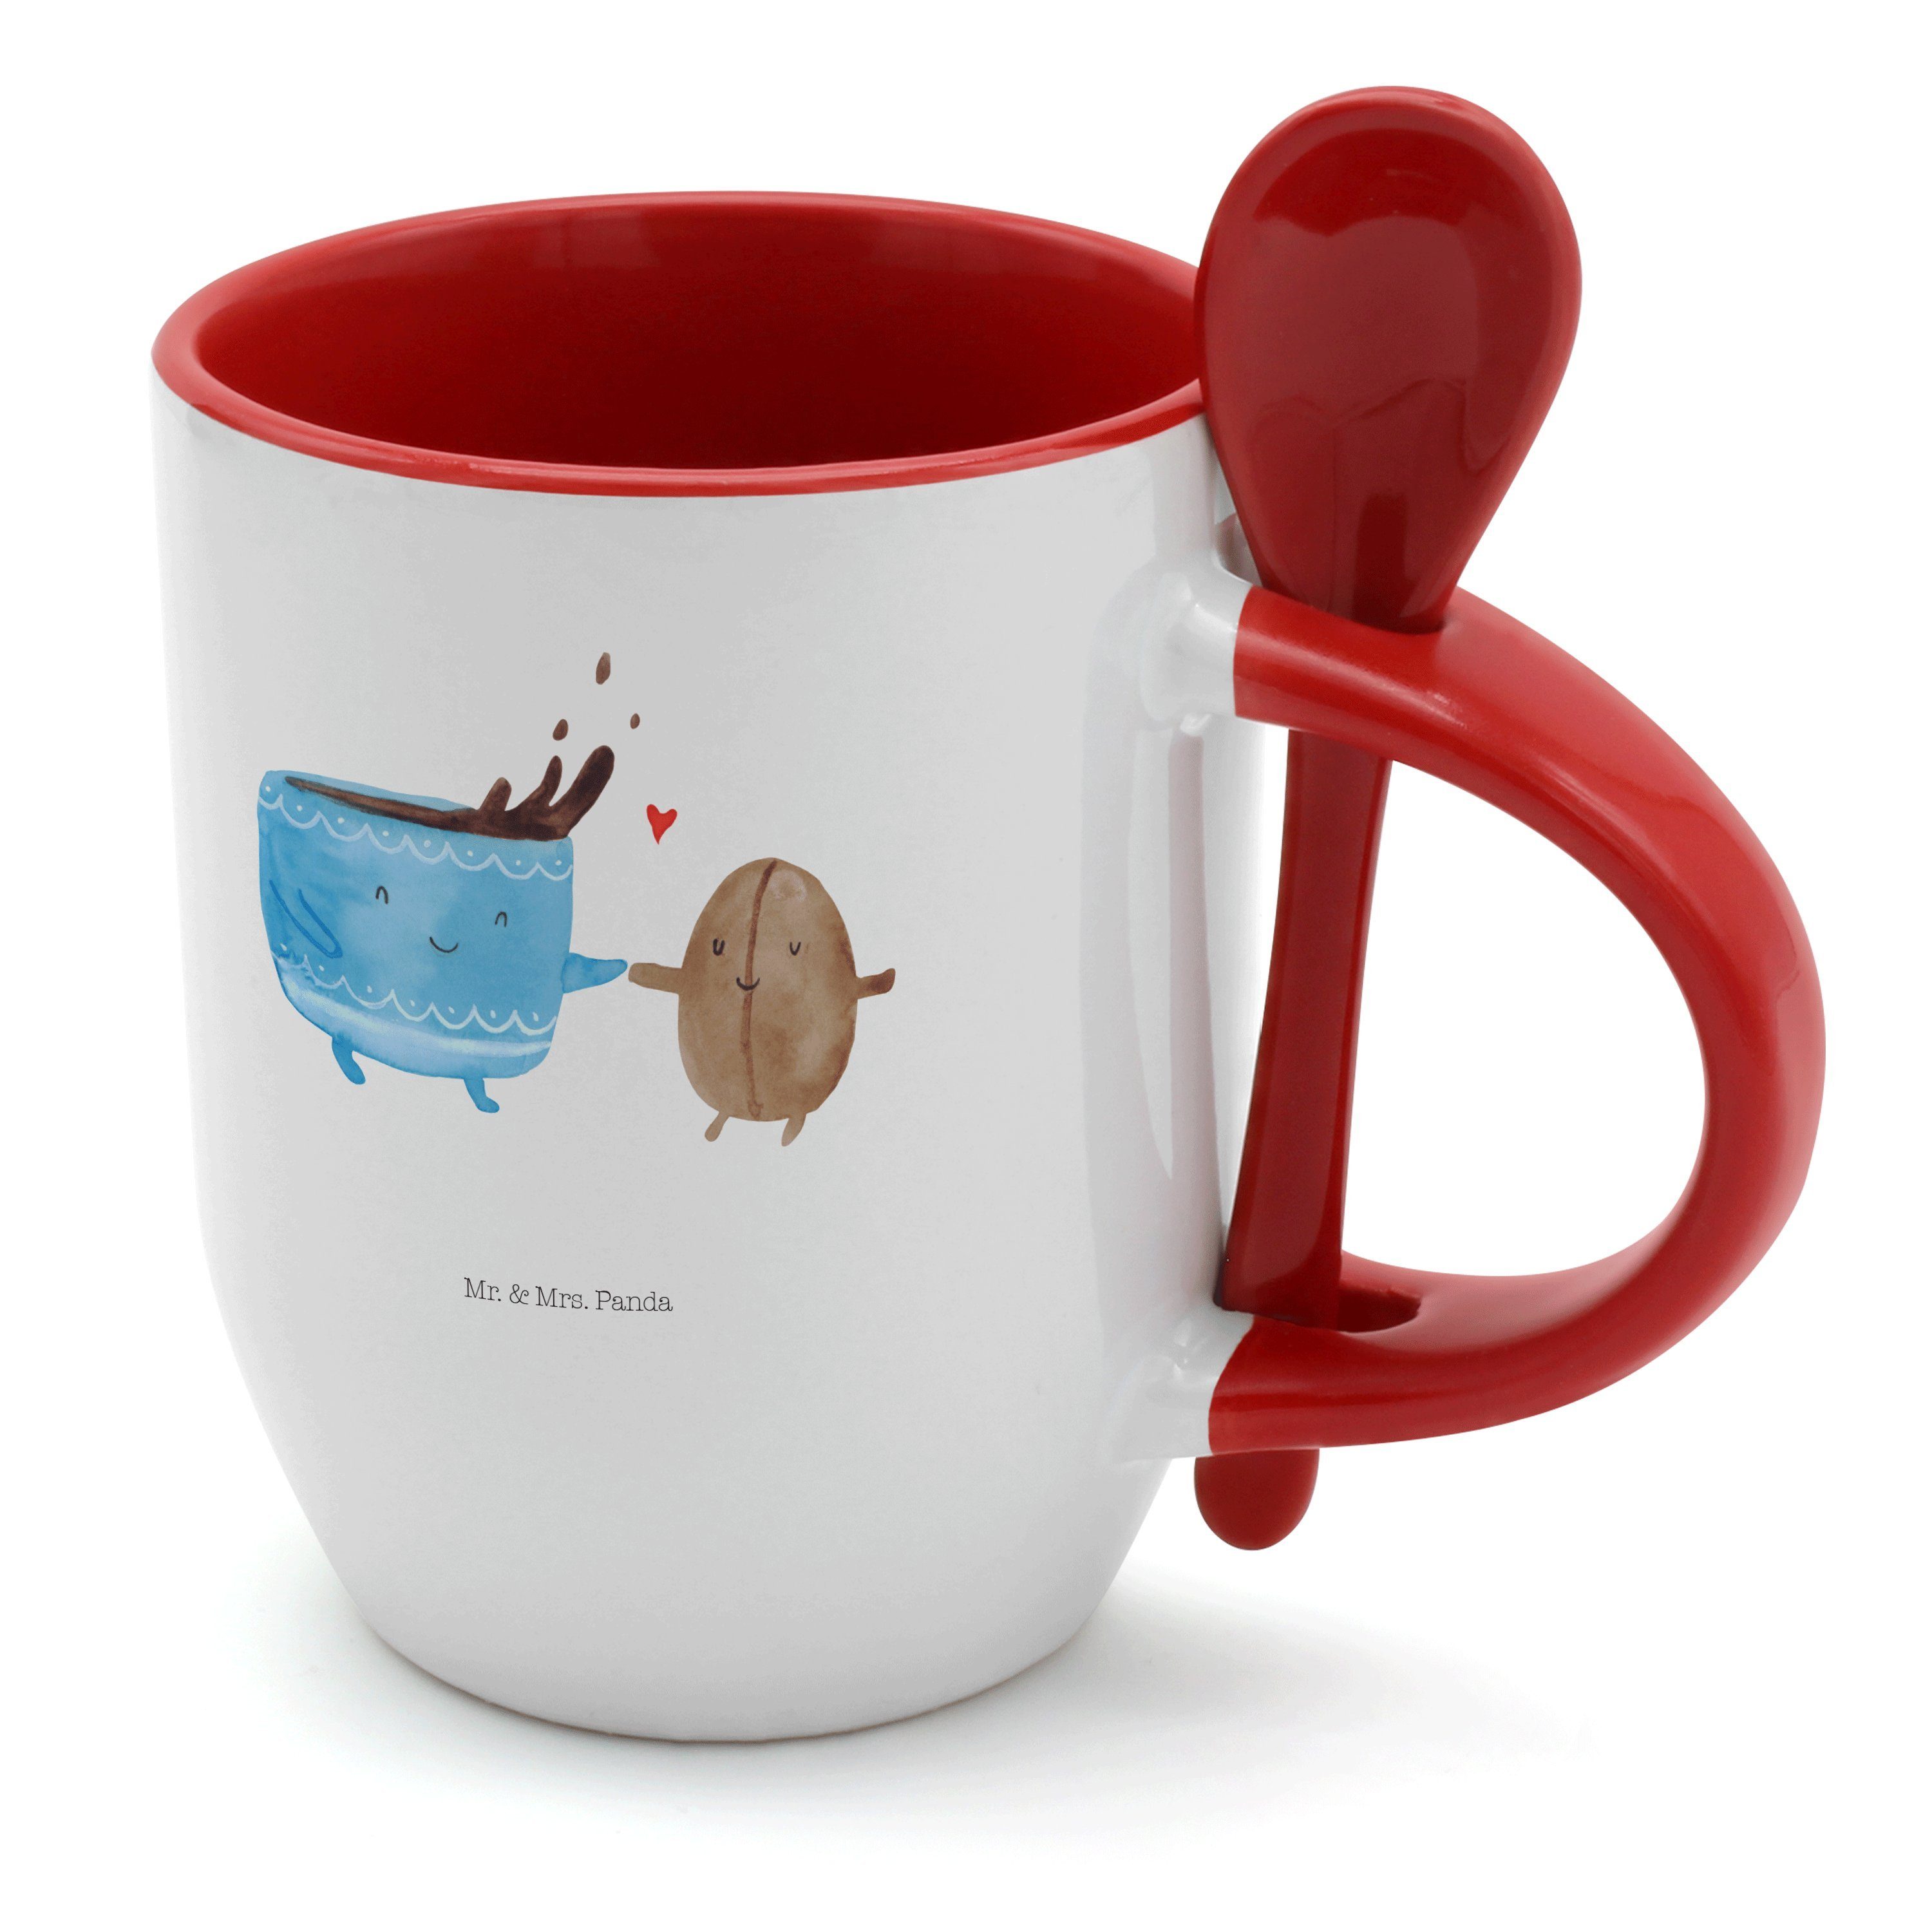 Mr. & Mrs. Panda Tasse Kaffee Bohne - Weiß - Geschenk, Kaffeebecher, Kaffeetasse, Tiere, Gut, Keramik | Tassen